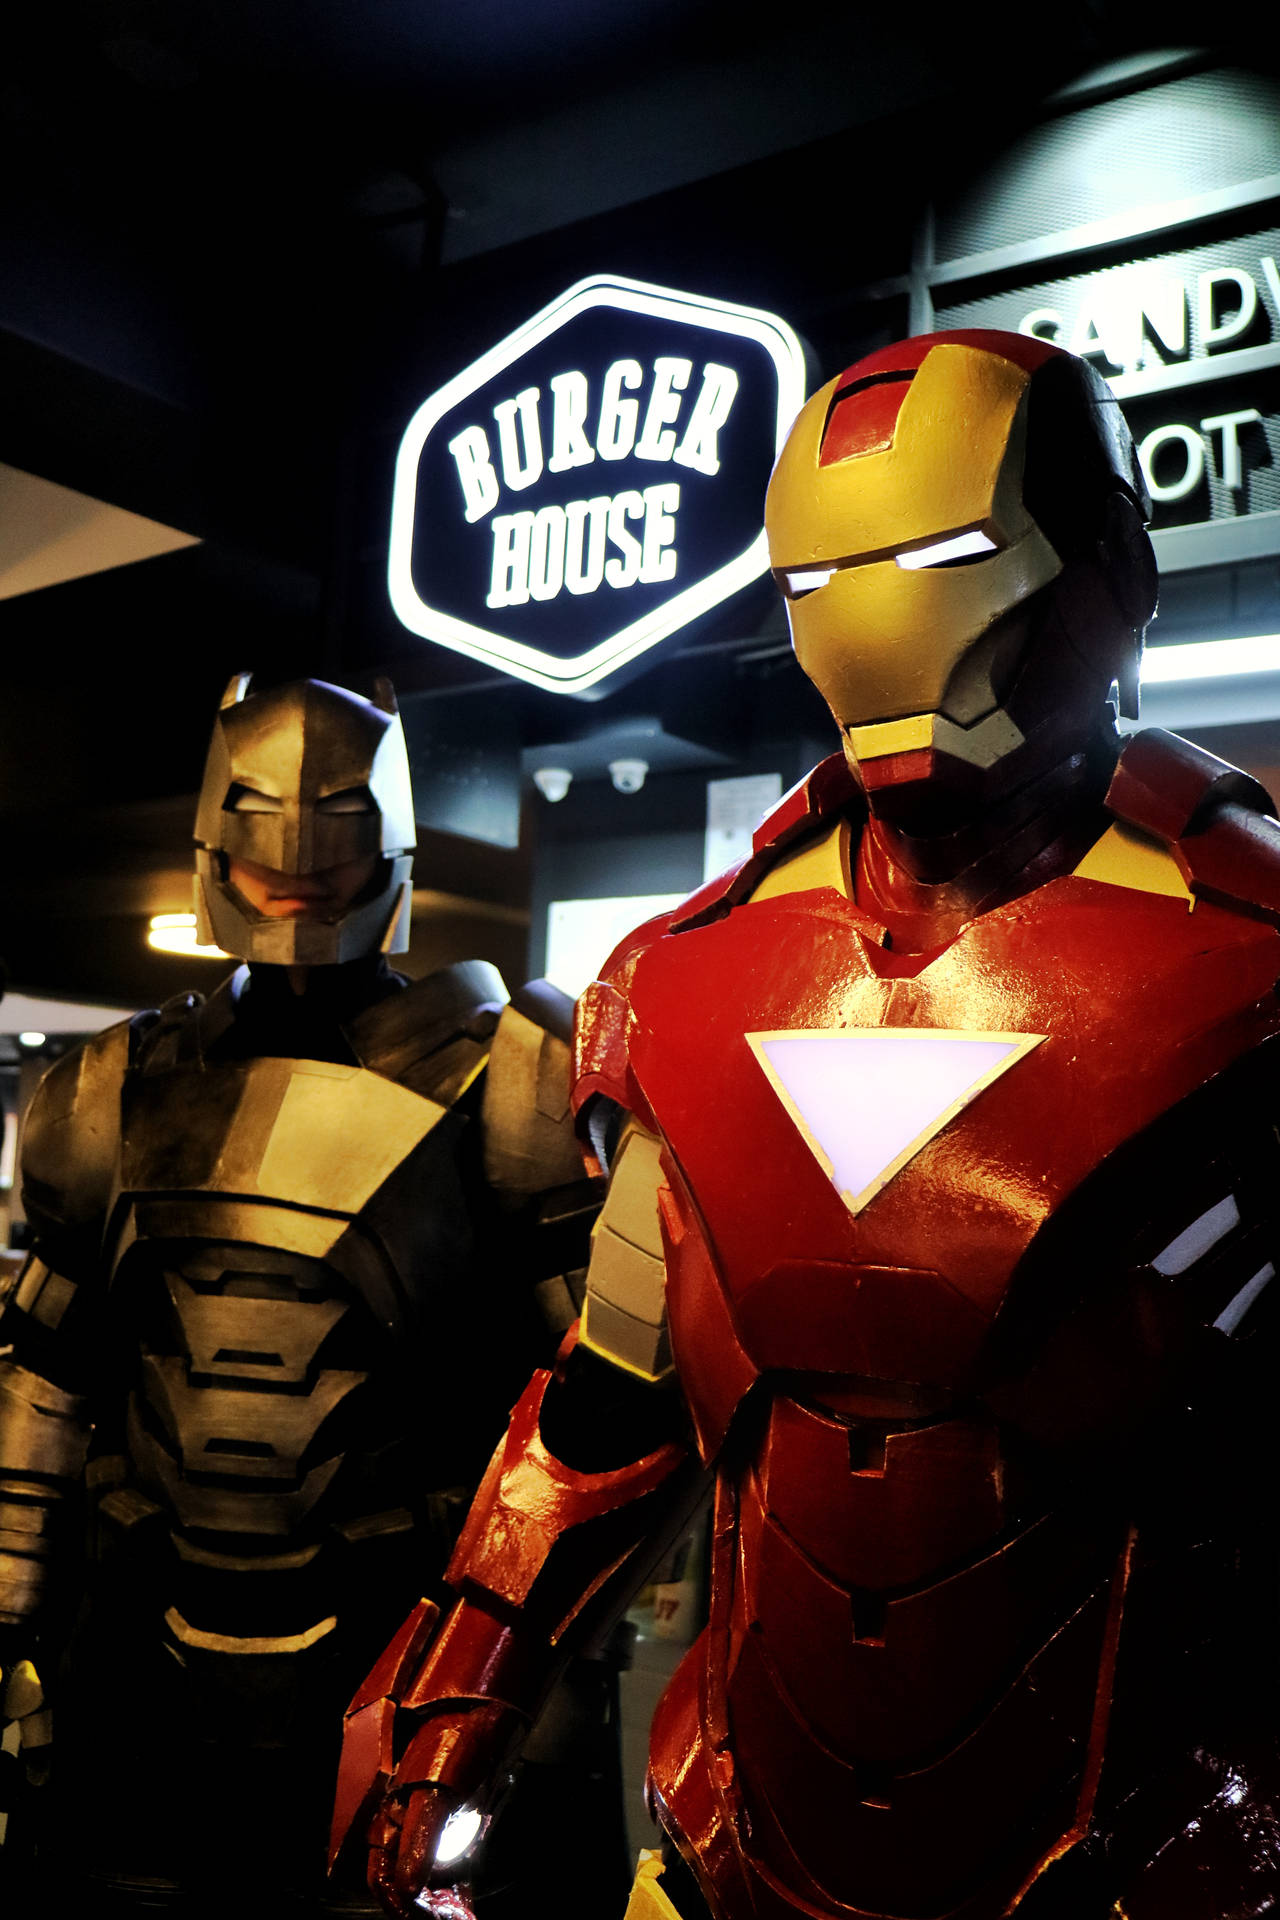 Iron Man Suits Burger House SVG